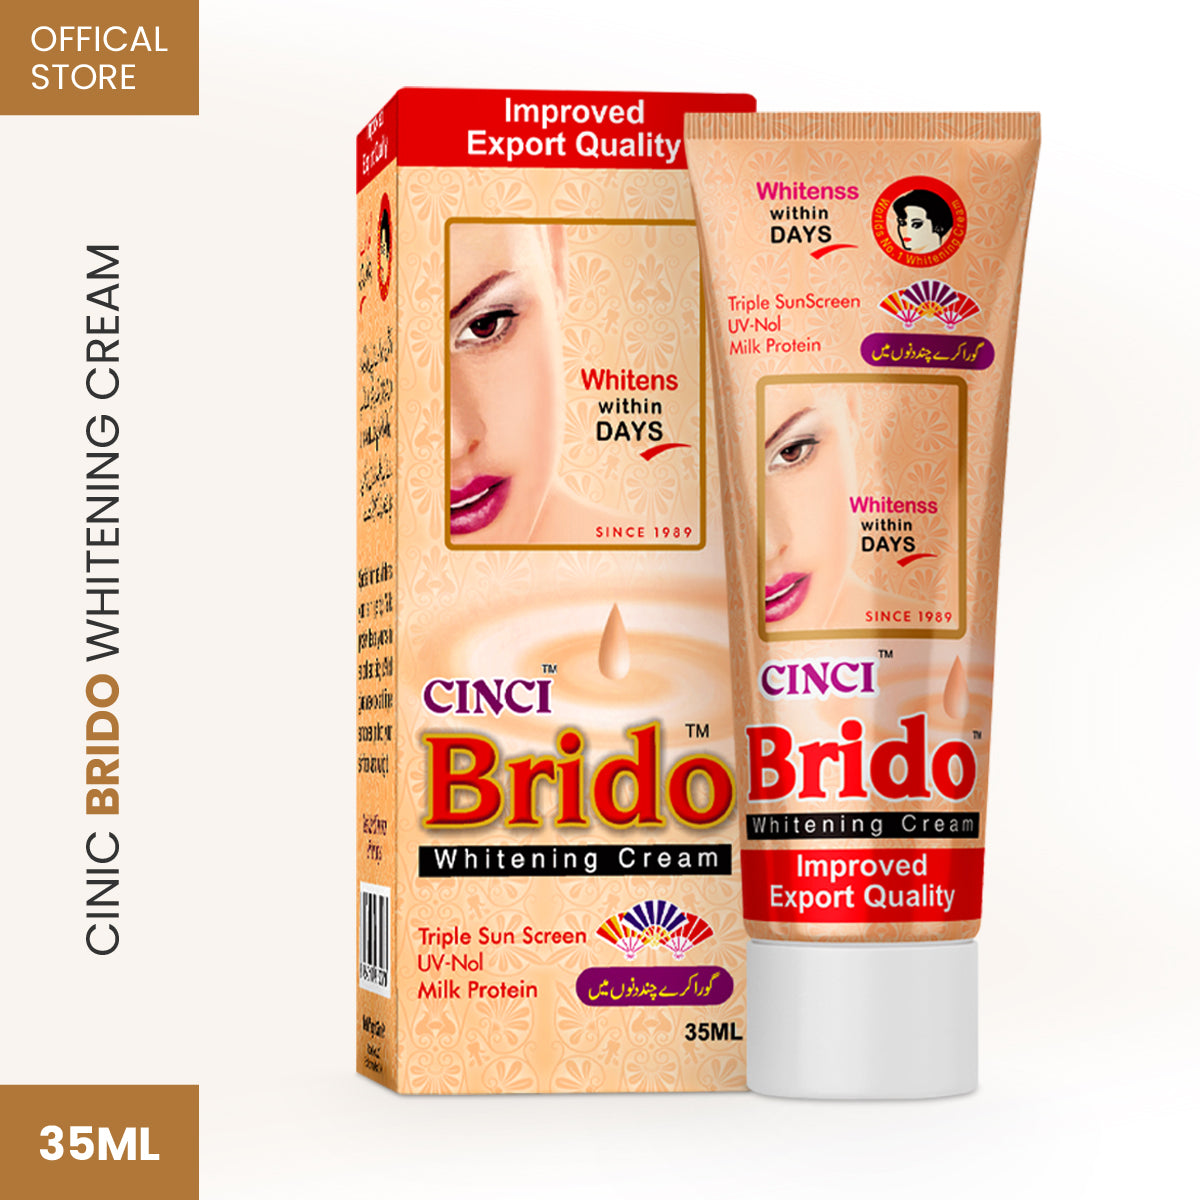 Brido Cinci Whitening Cream formula with Milk Protein